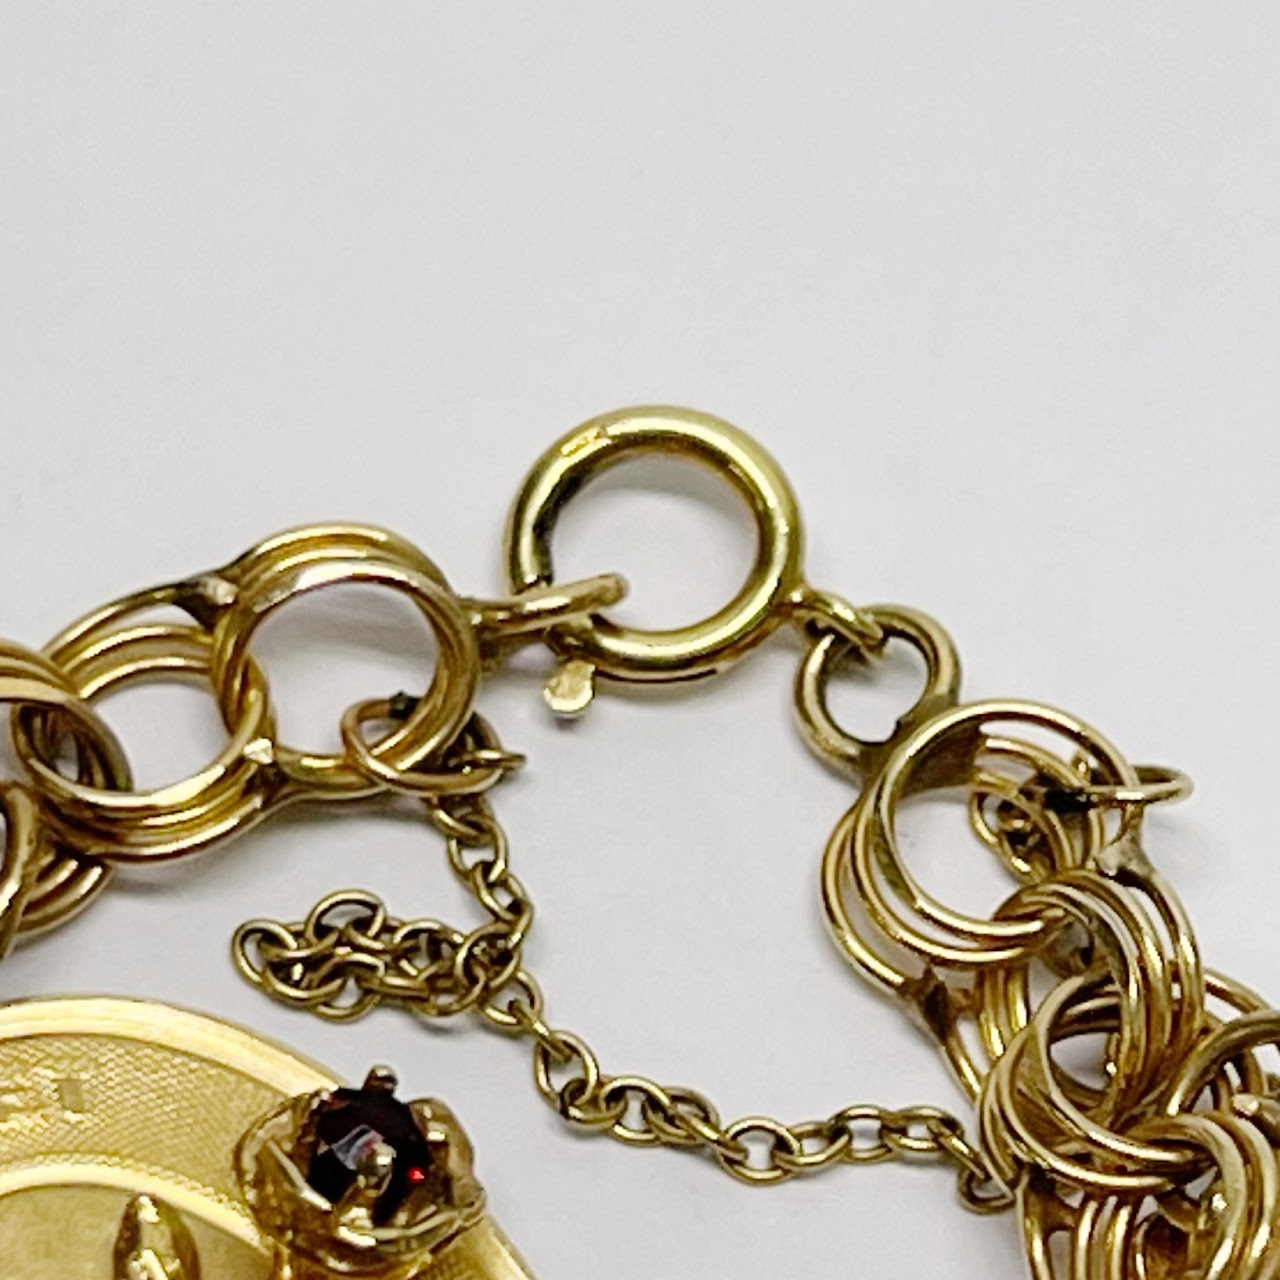 14K Gold and Sterling Silver Charm Bracelet